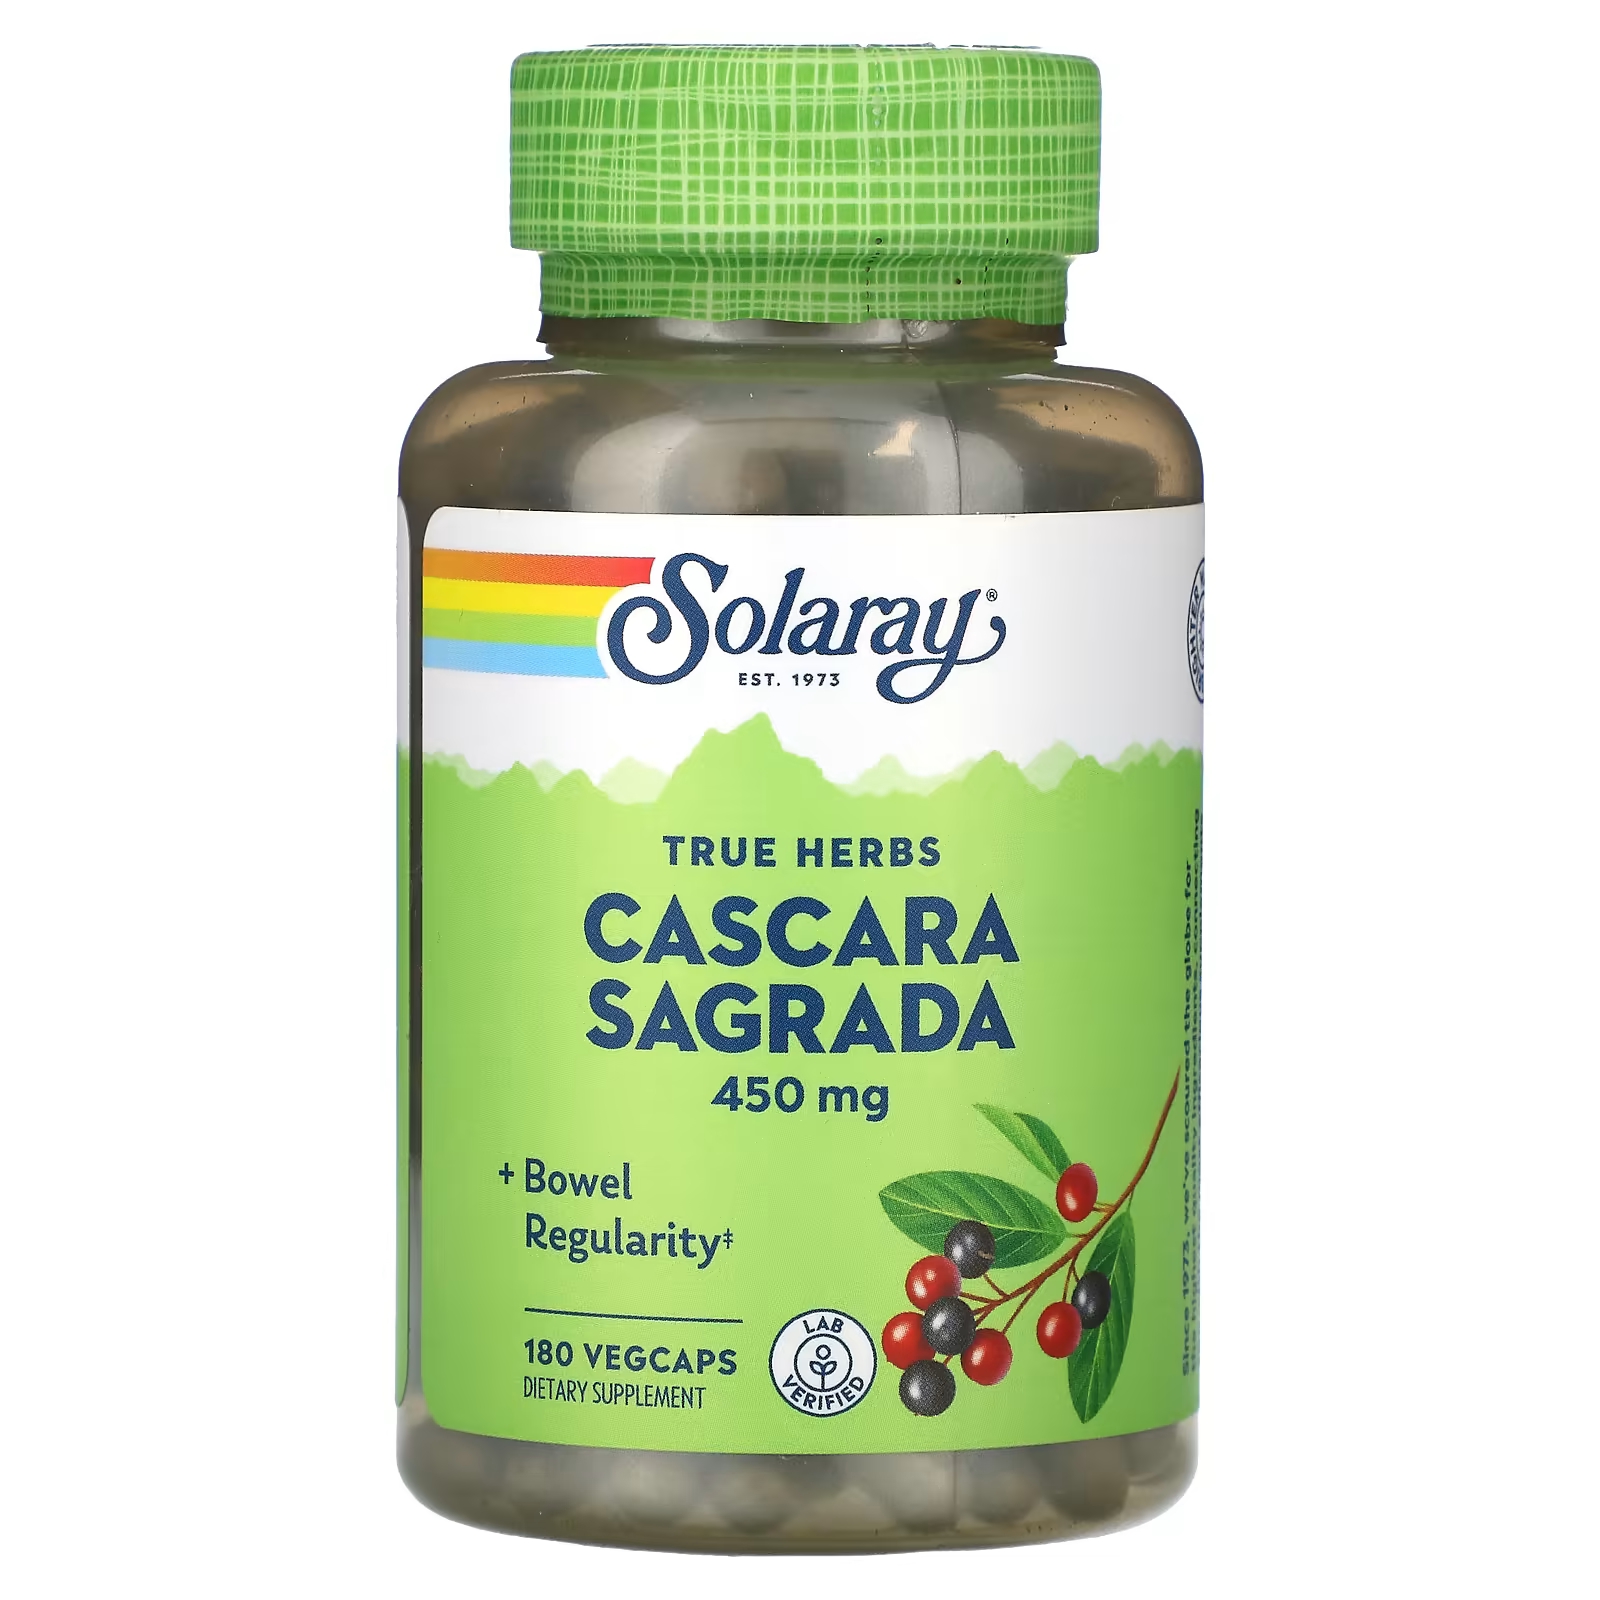 Solaray Cascara Sagrada True Herbs 450 мг 180 растительных капсул solaray true herbs каскара саграда 450 мг 180 вегетарианских капсул